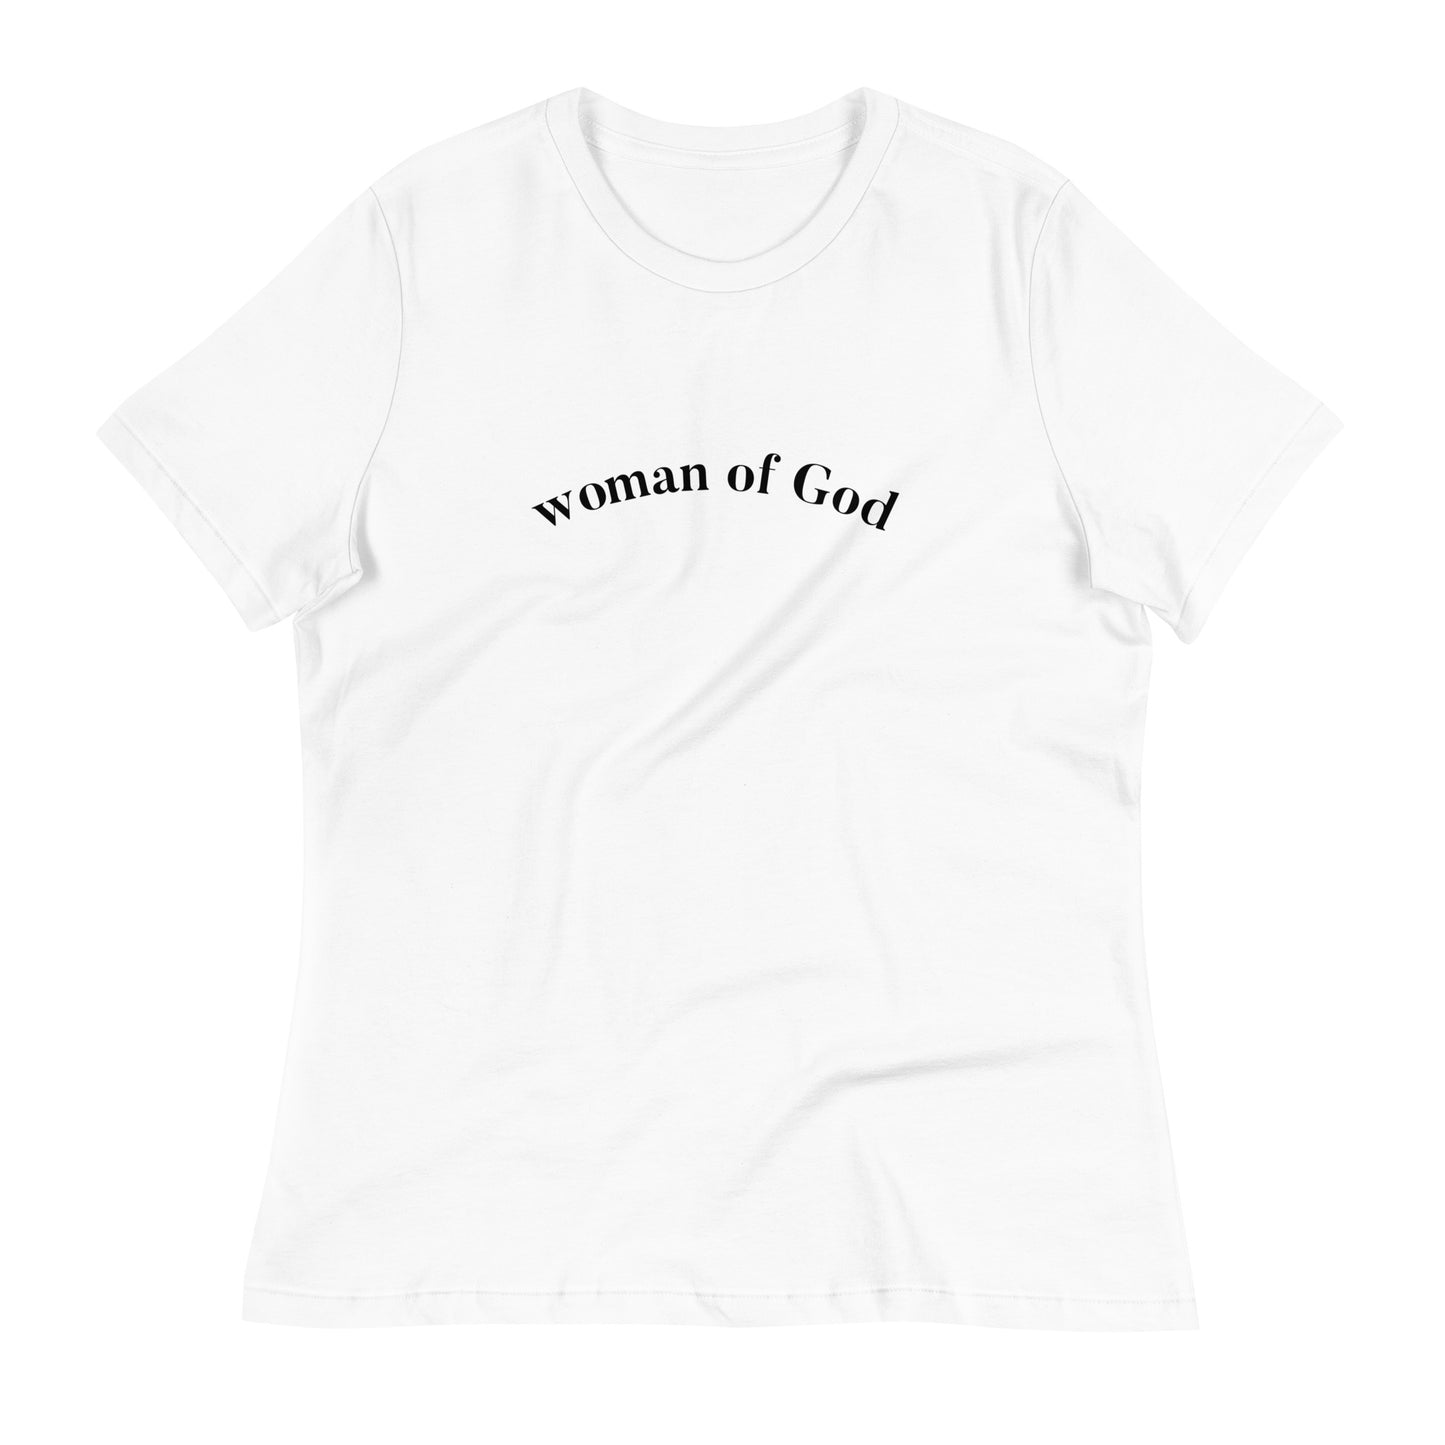 WOMAN OF GOD - 2.0 - Women's Relaxed T-Shirt